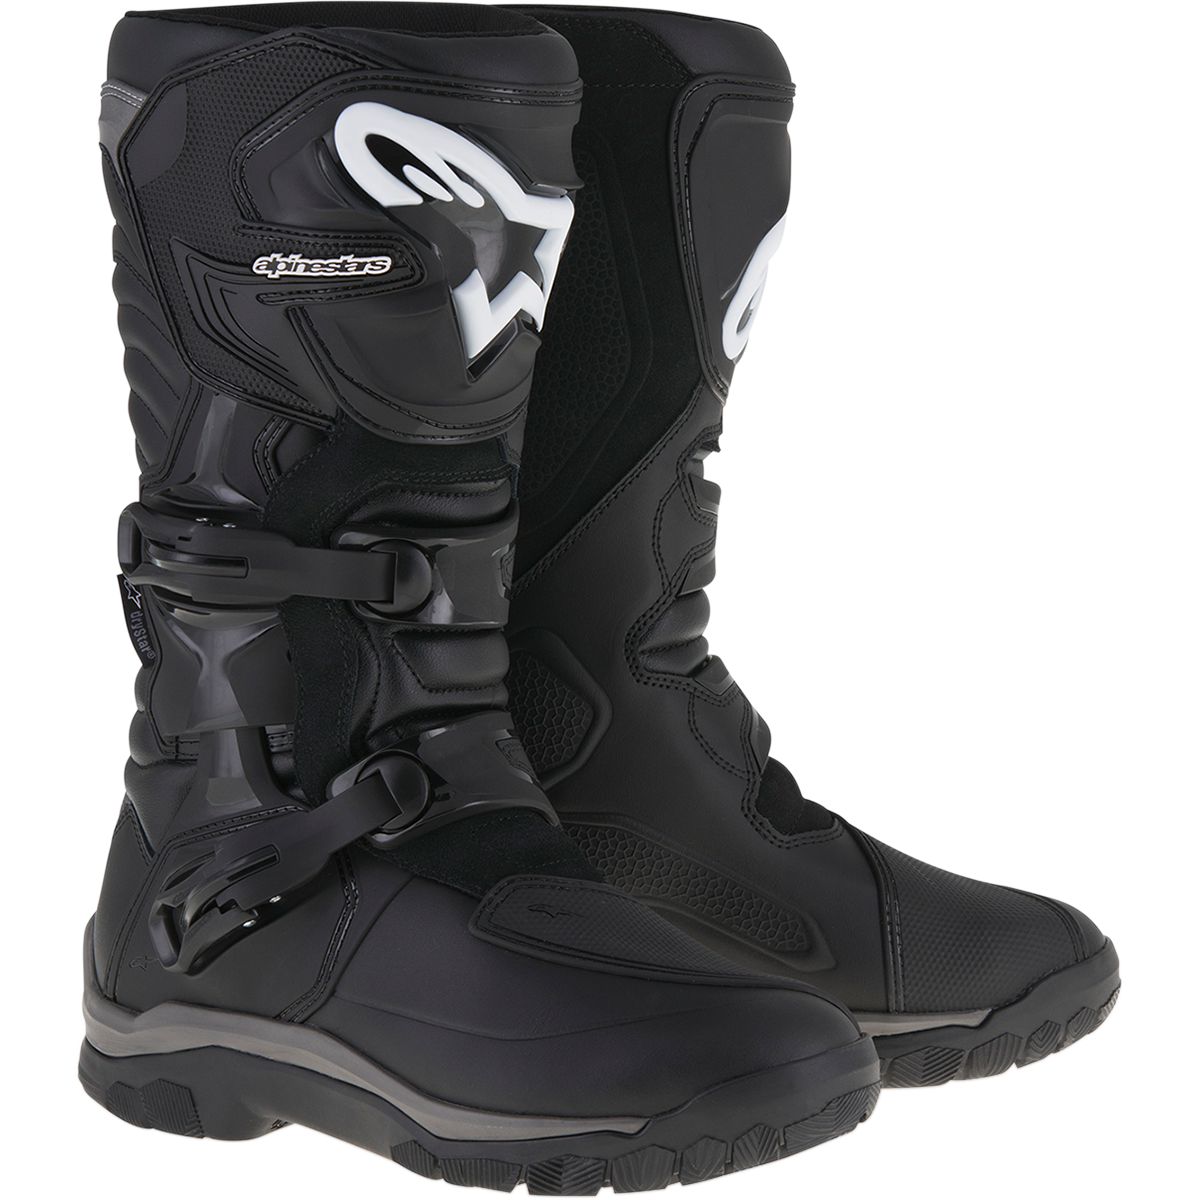 Corozal Adventure Drystar® Boots